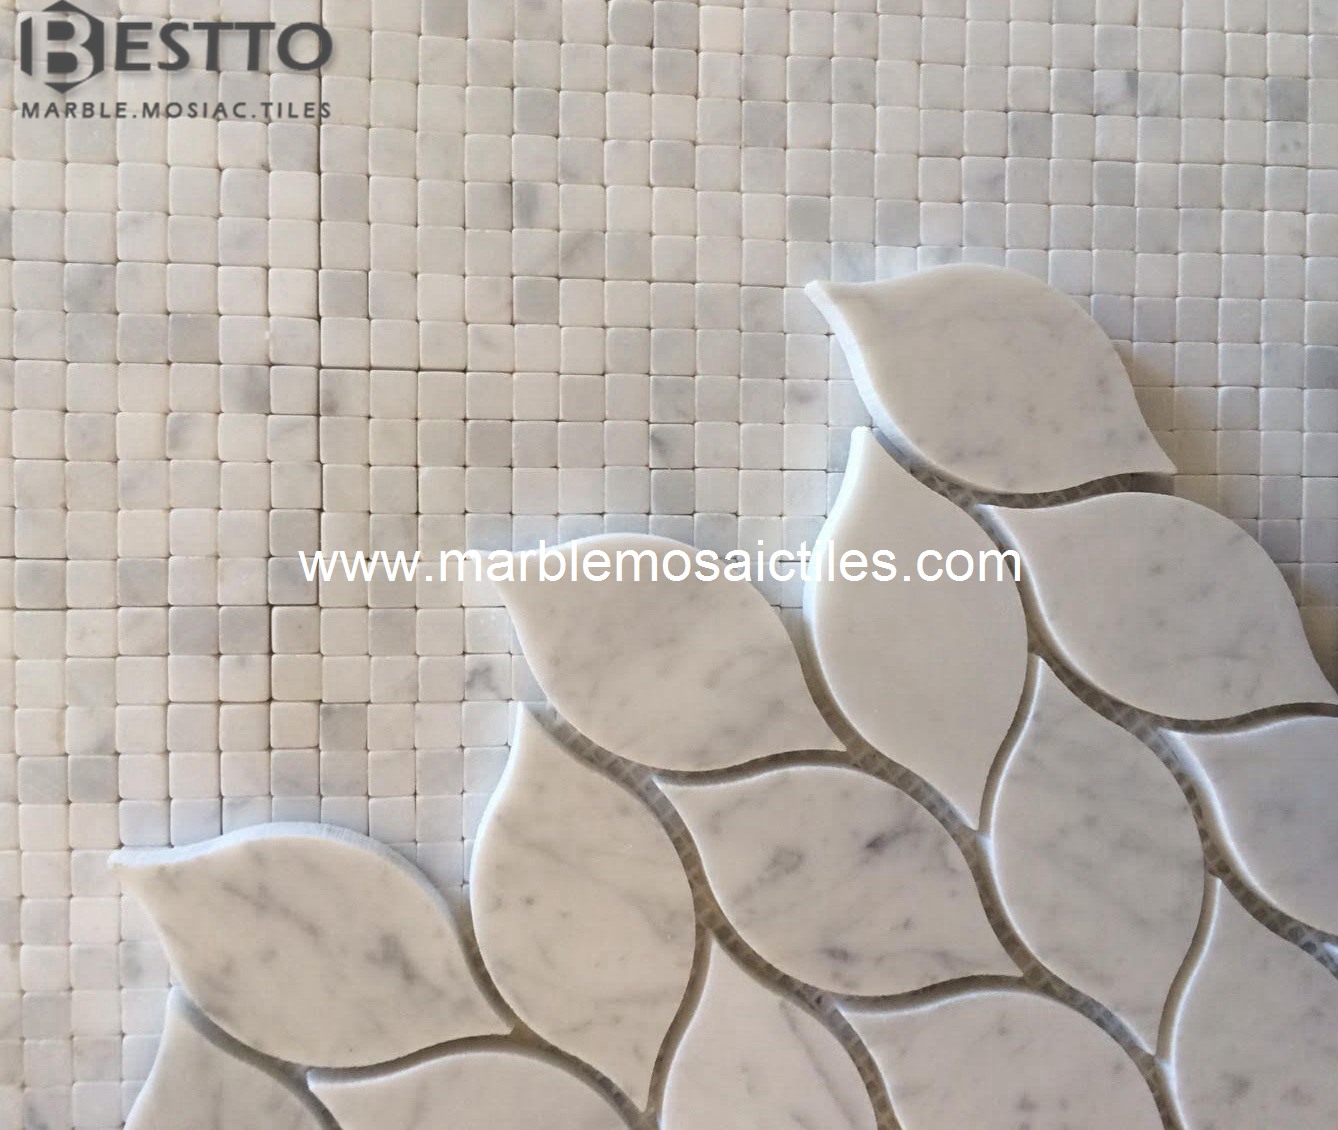 Carrara leaves Mosaic Tiles